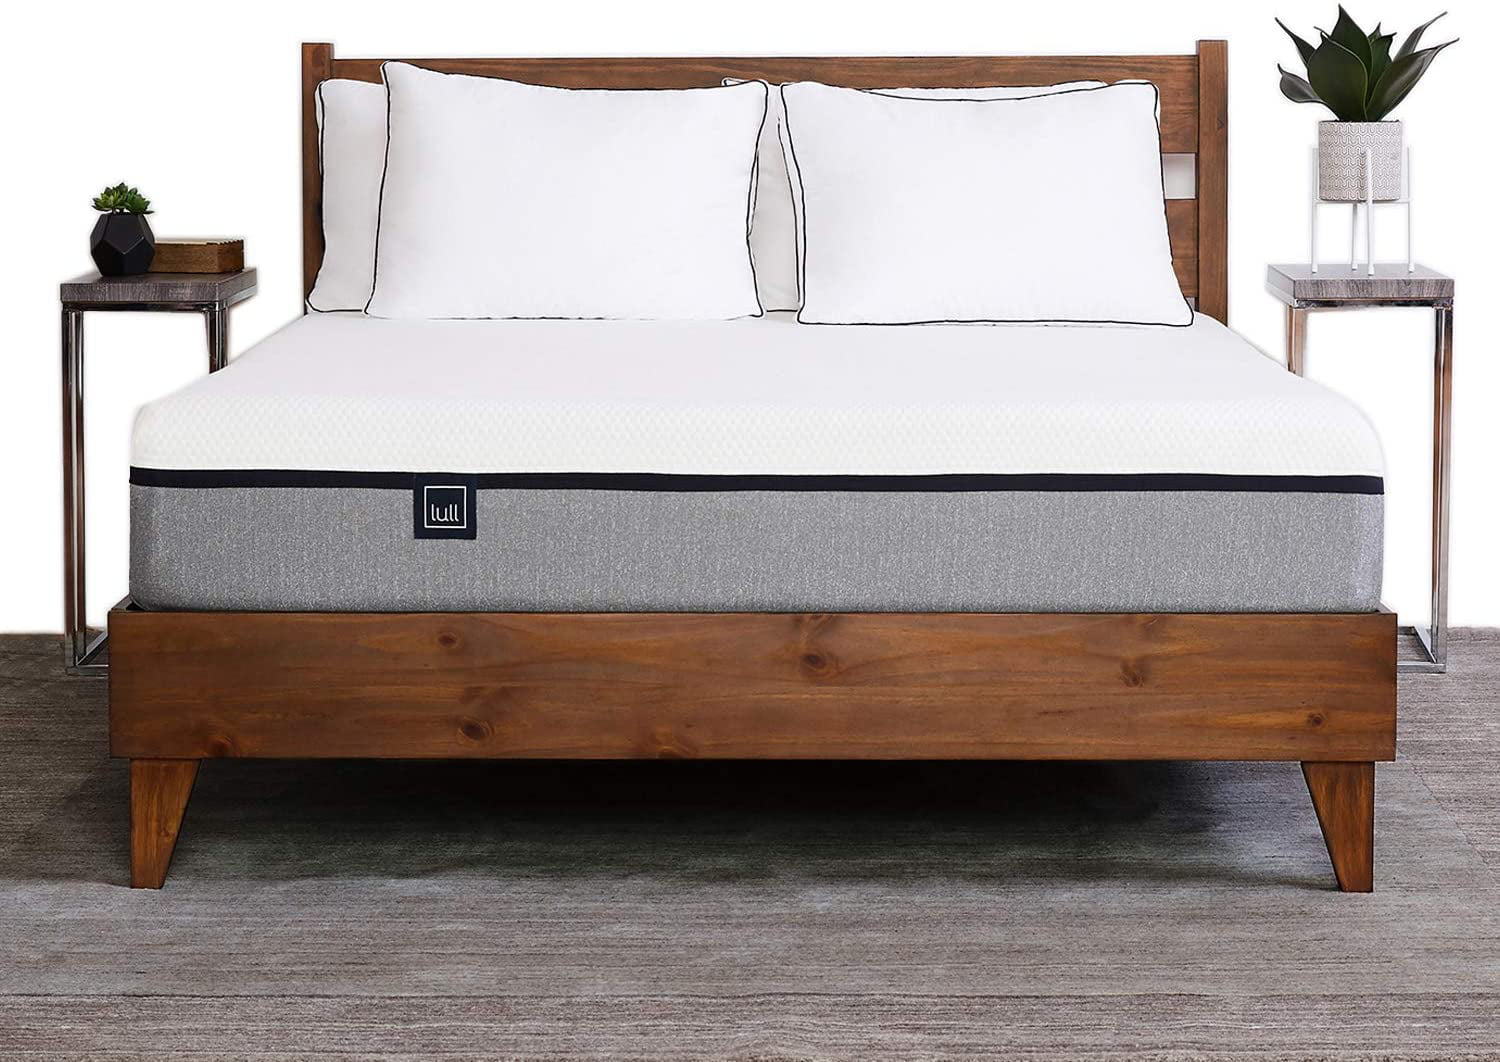 lull mattress full size price